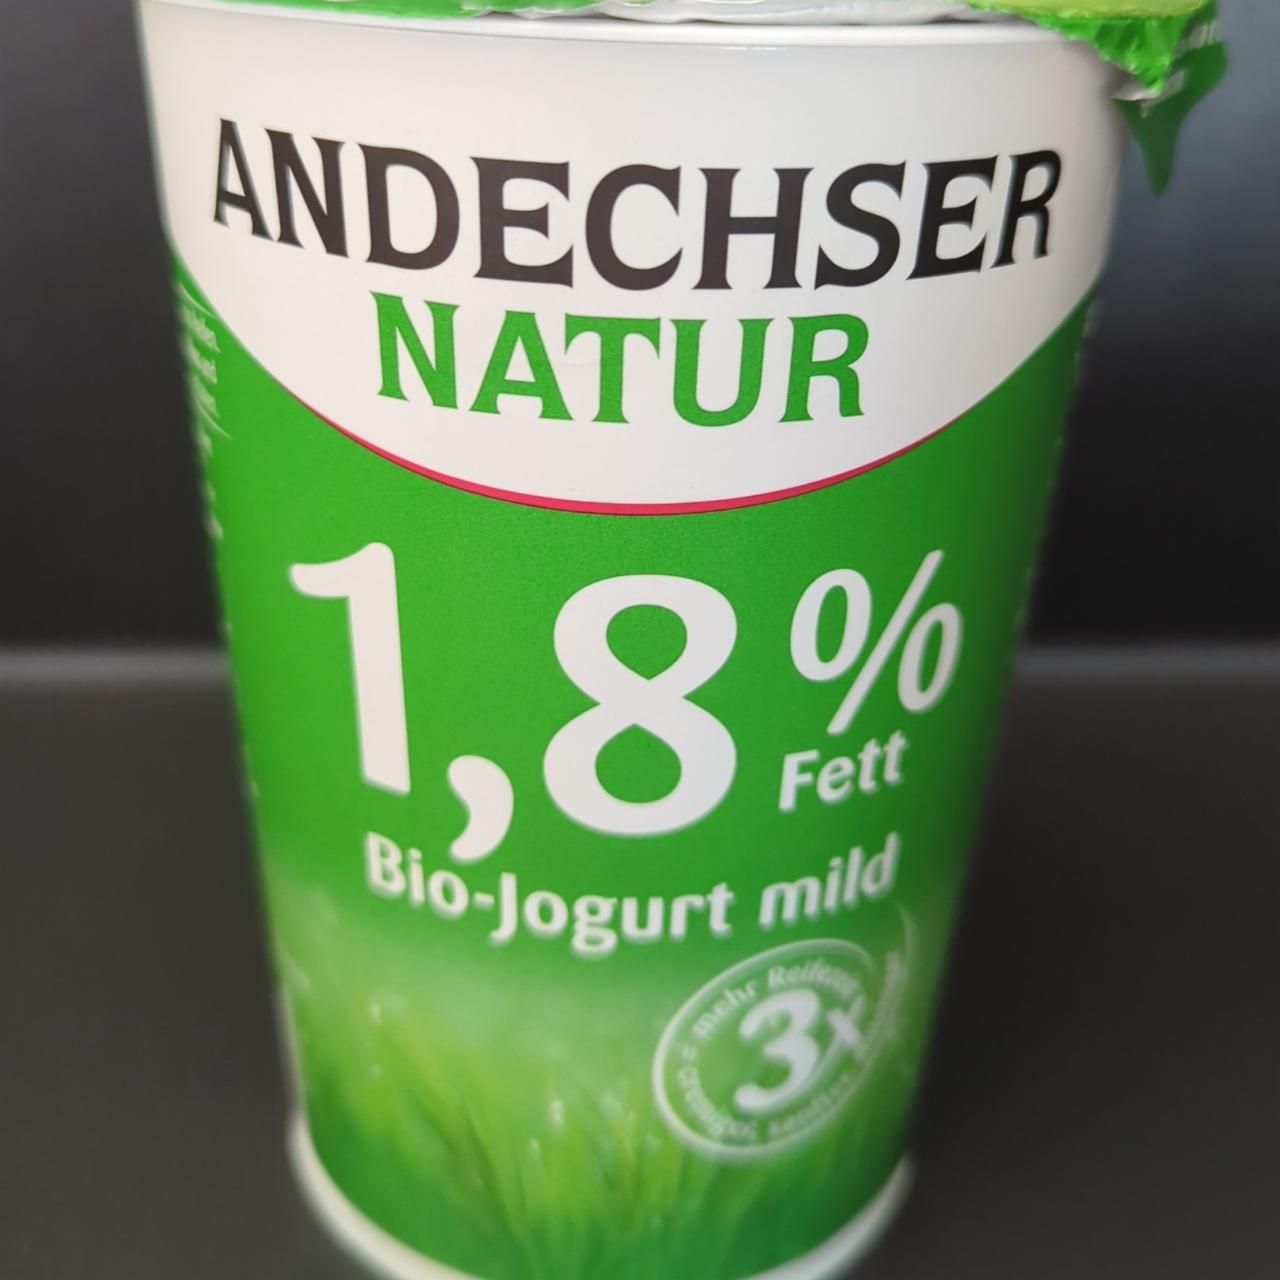 Fotografie - Bio-Jogurt mild 1,8% Andechser natur